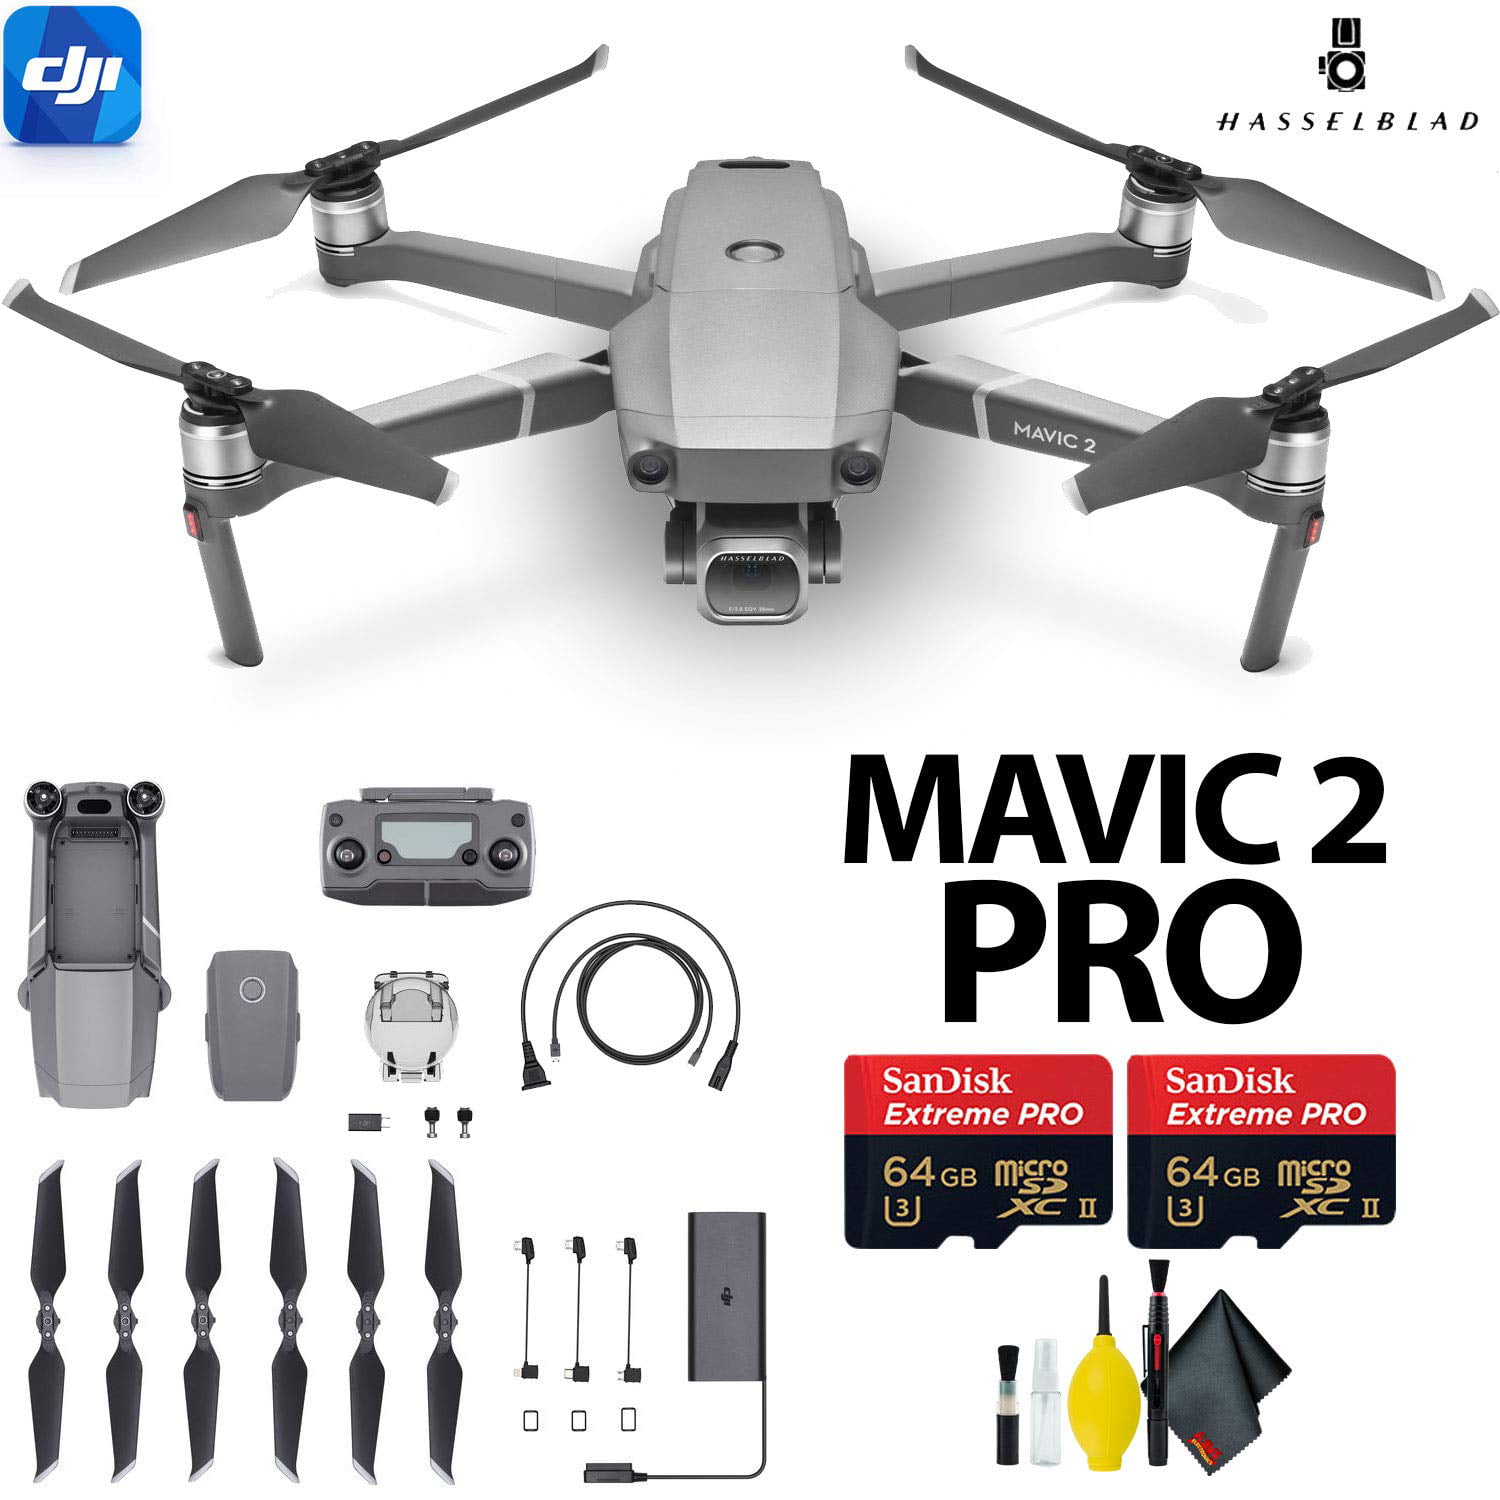 DJI Mavic 2 Pro - Walmart.com